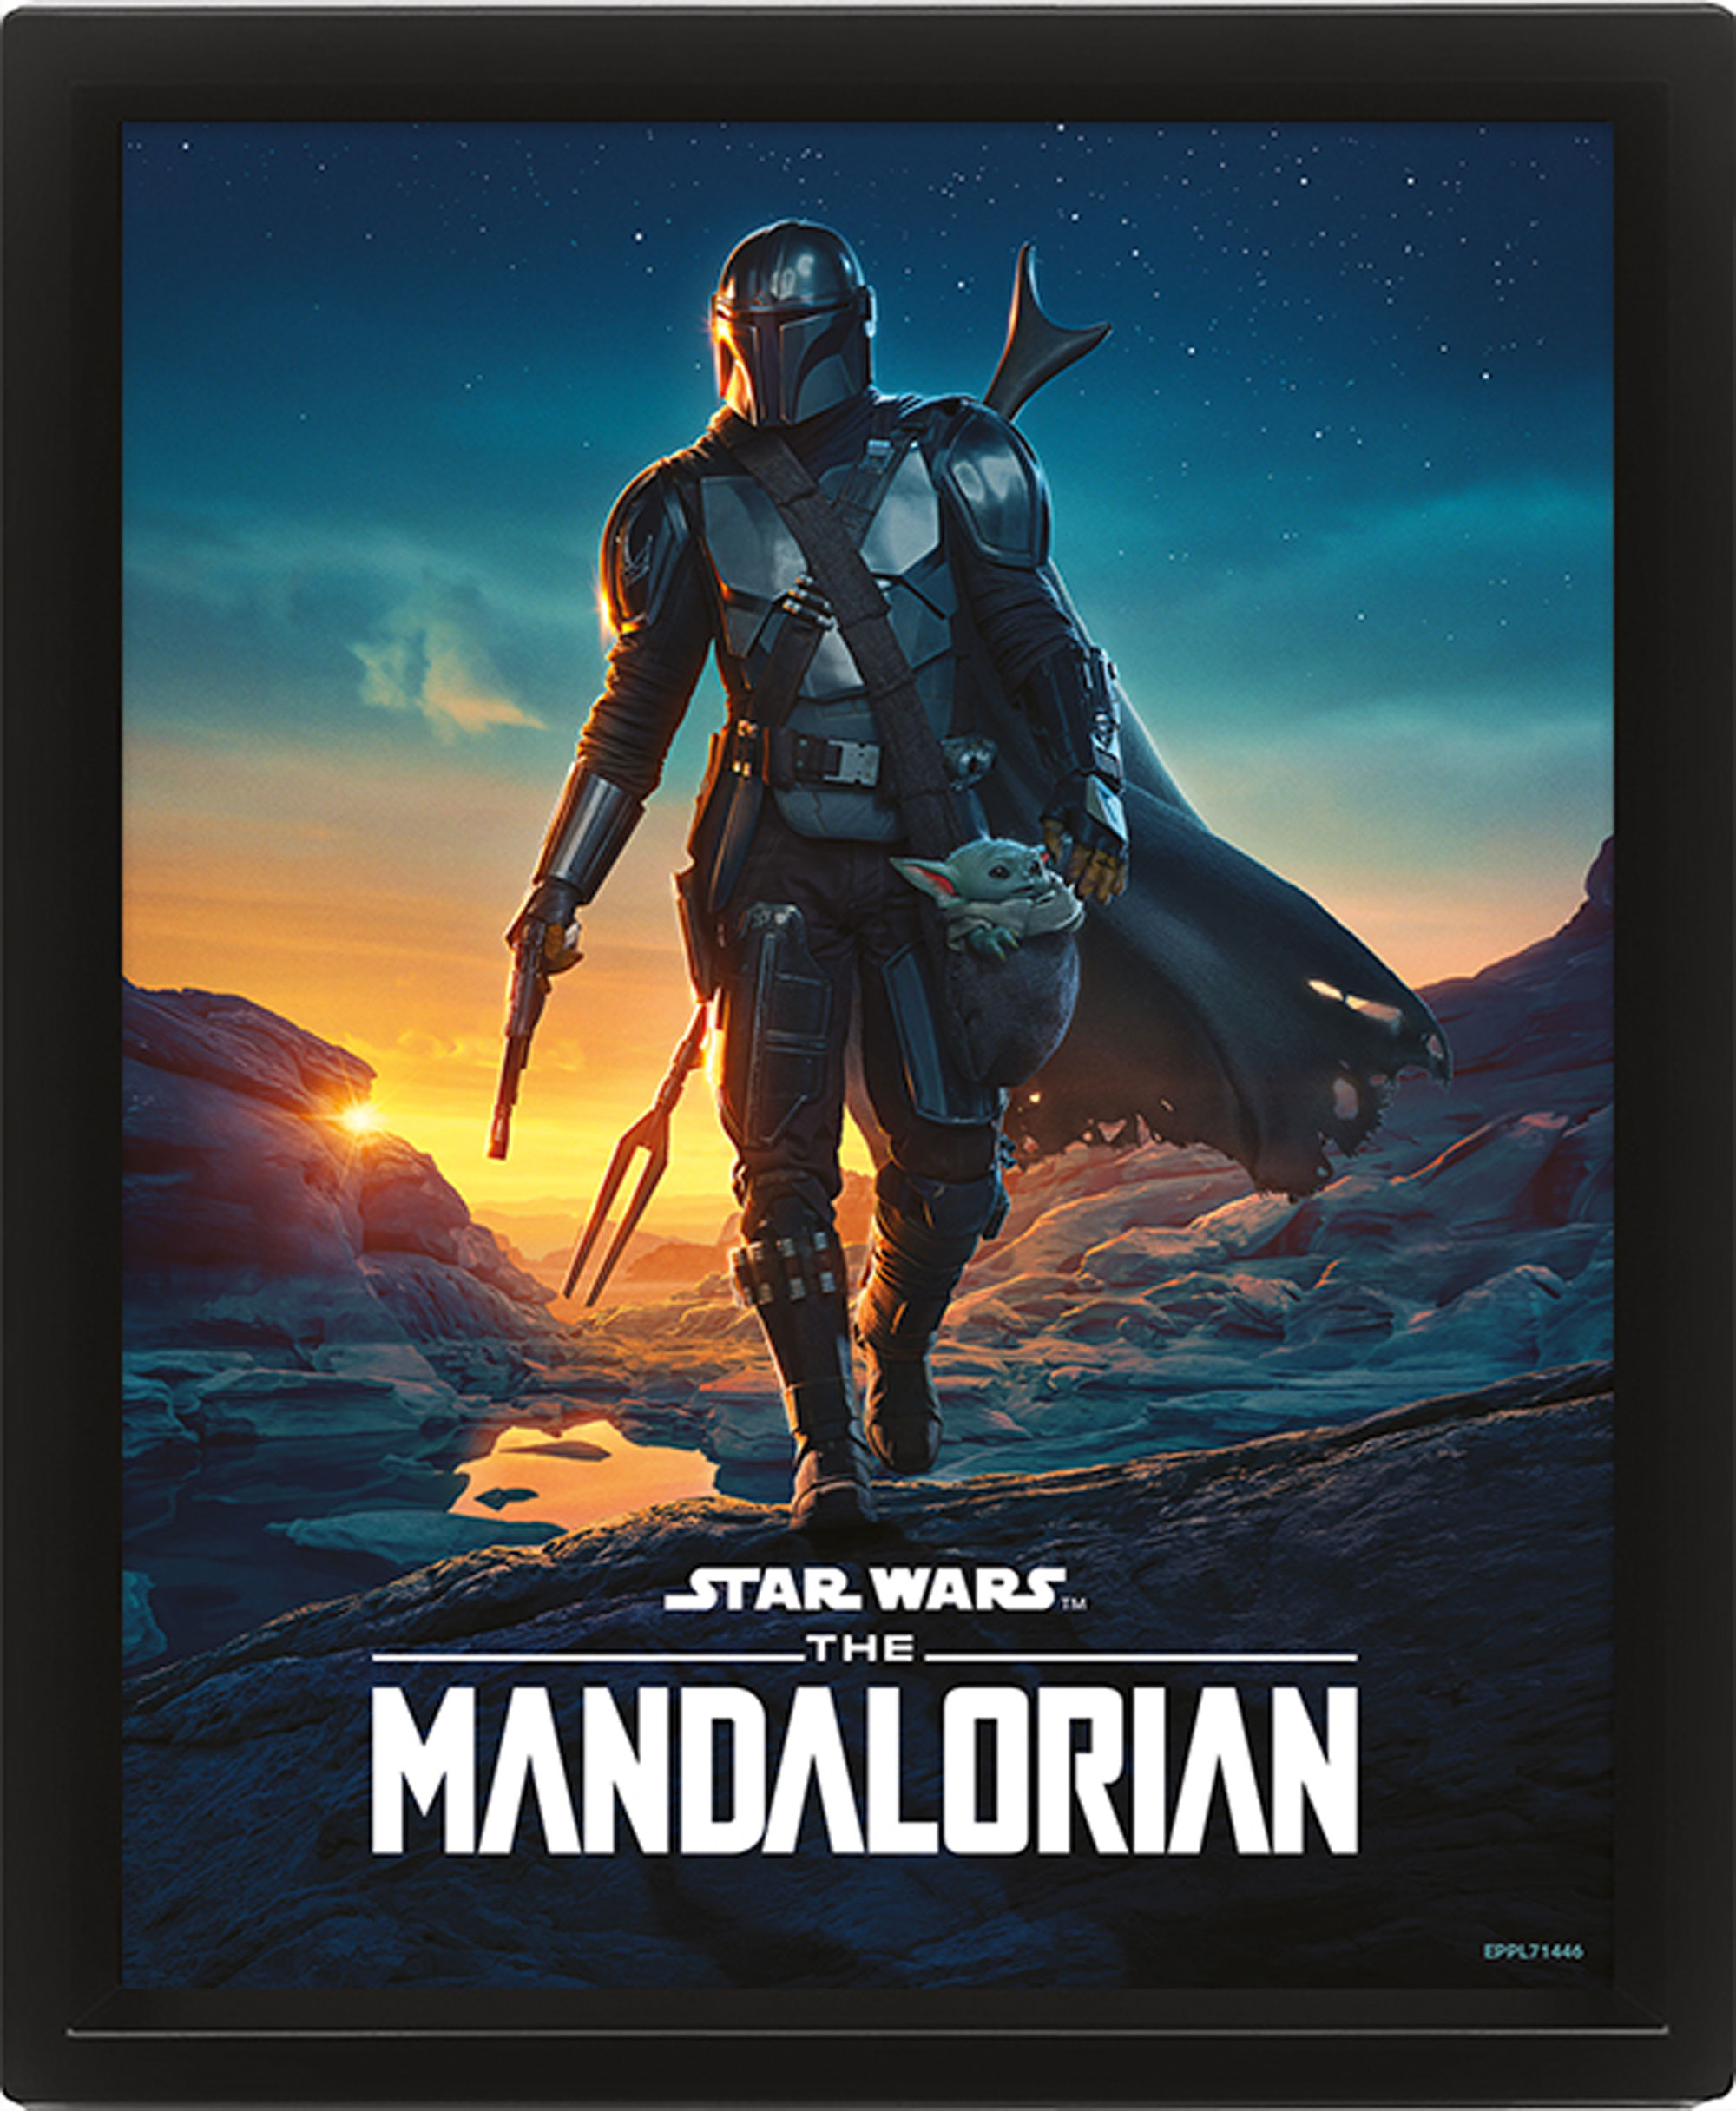 Wars Mandalorian - Nightfall - Star